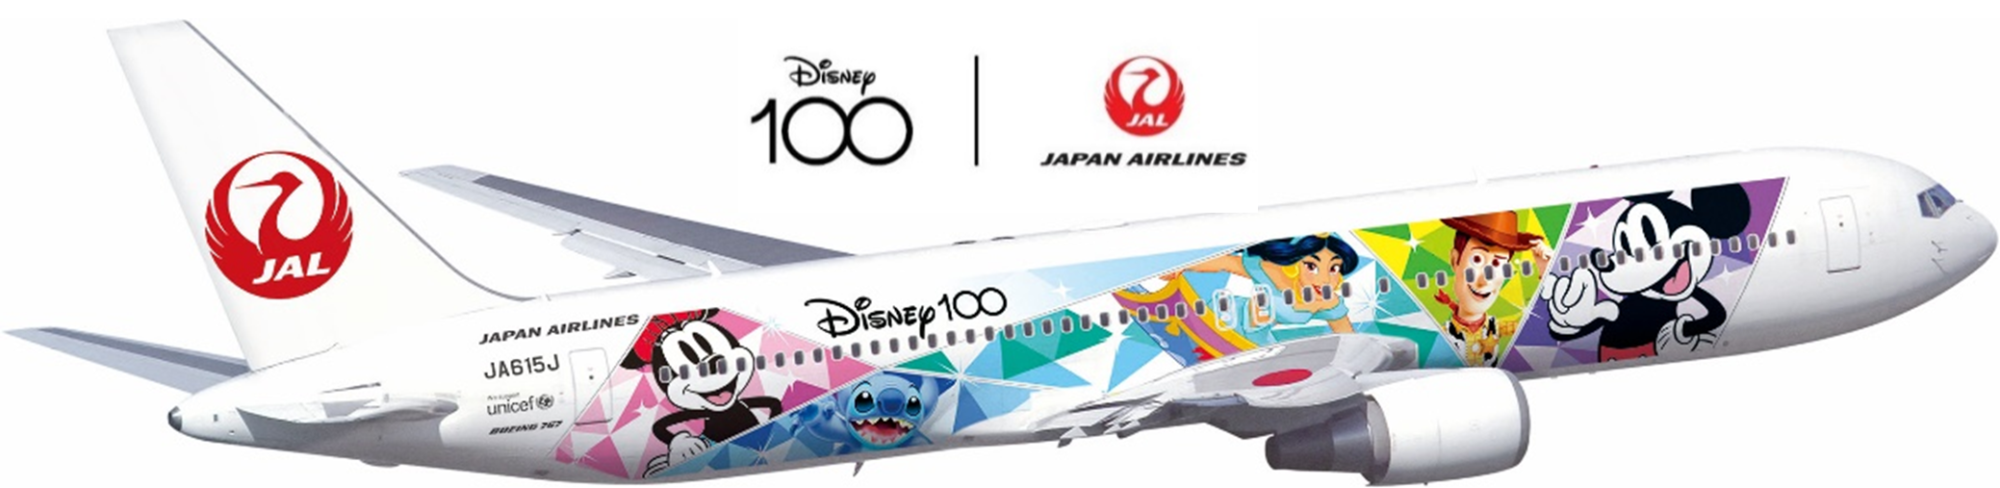 JapanAirlinesDisney100Plane 1